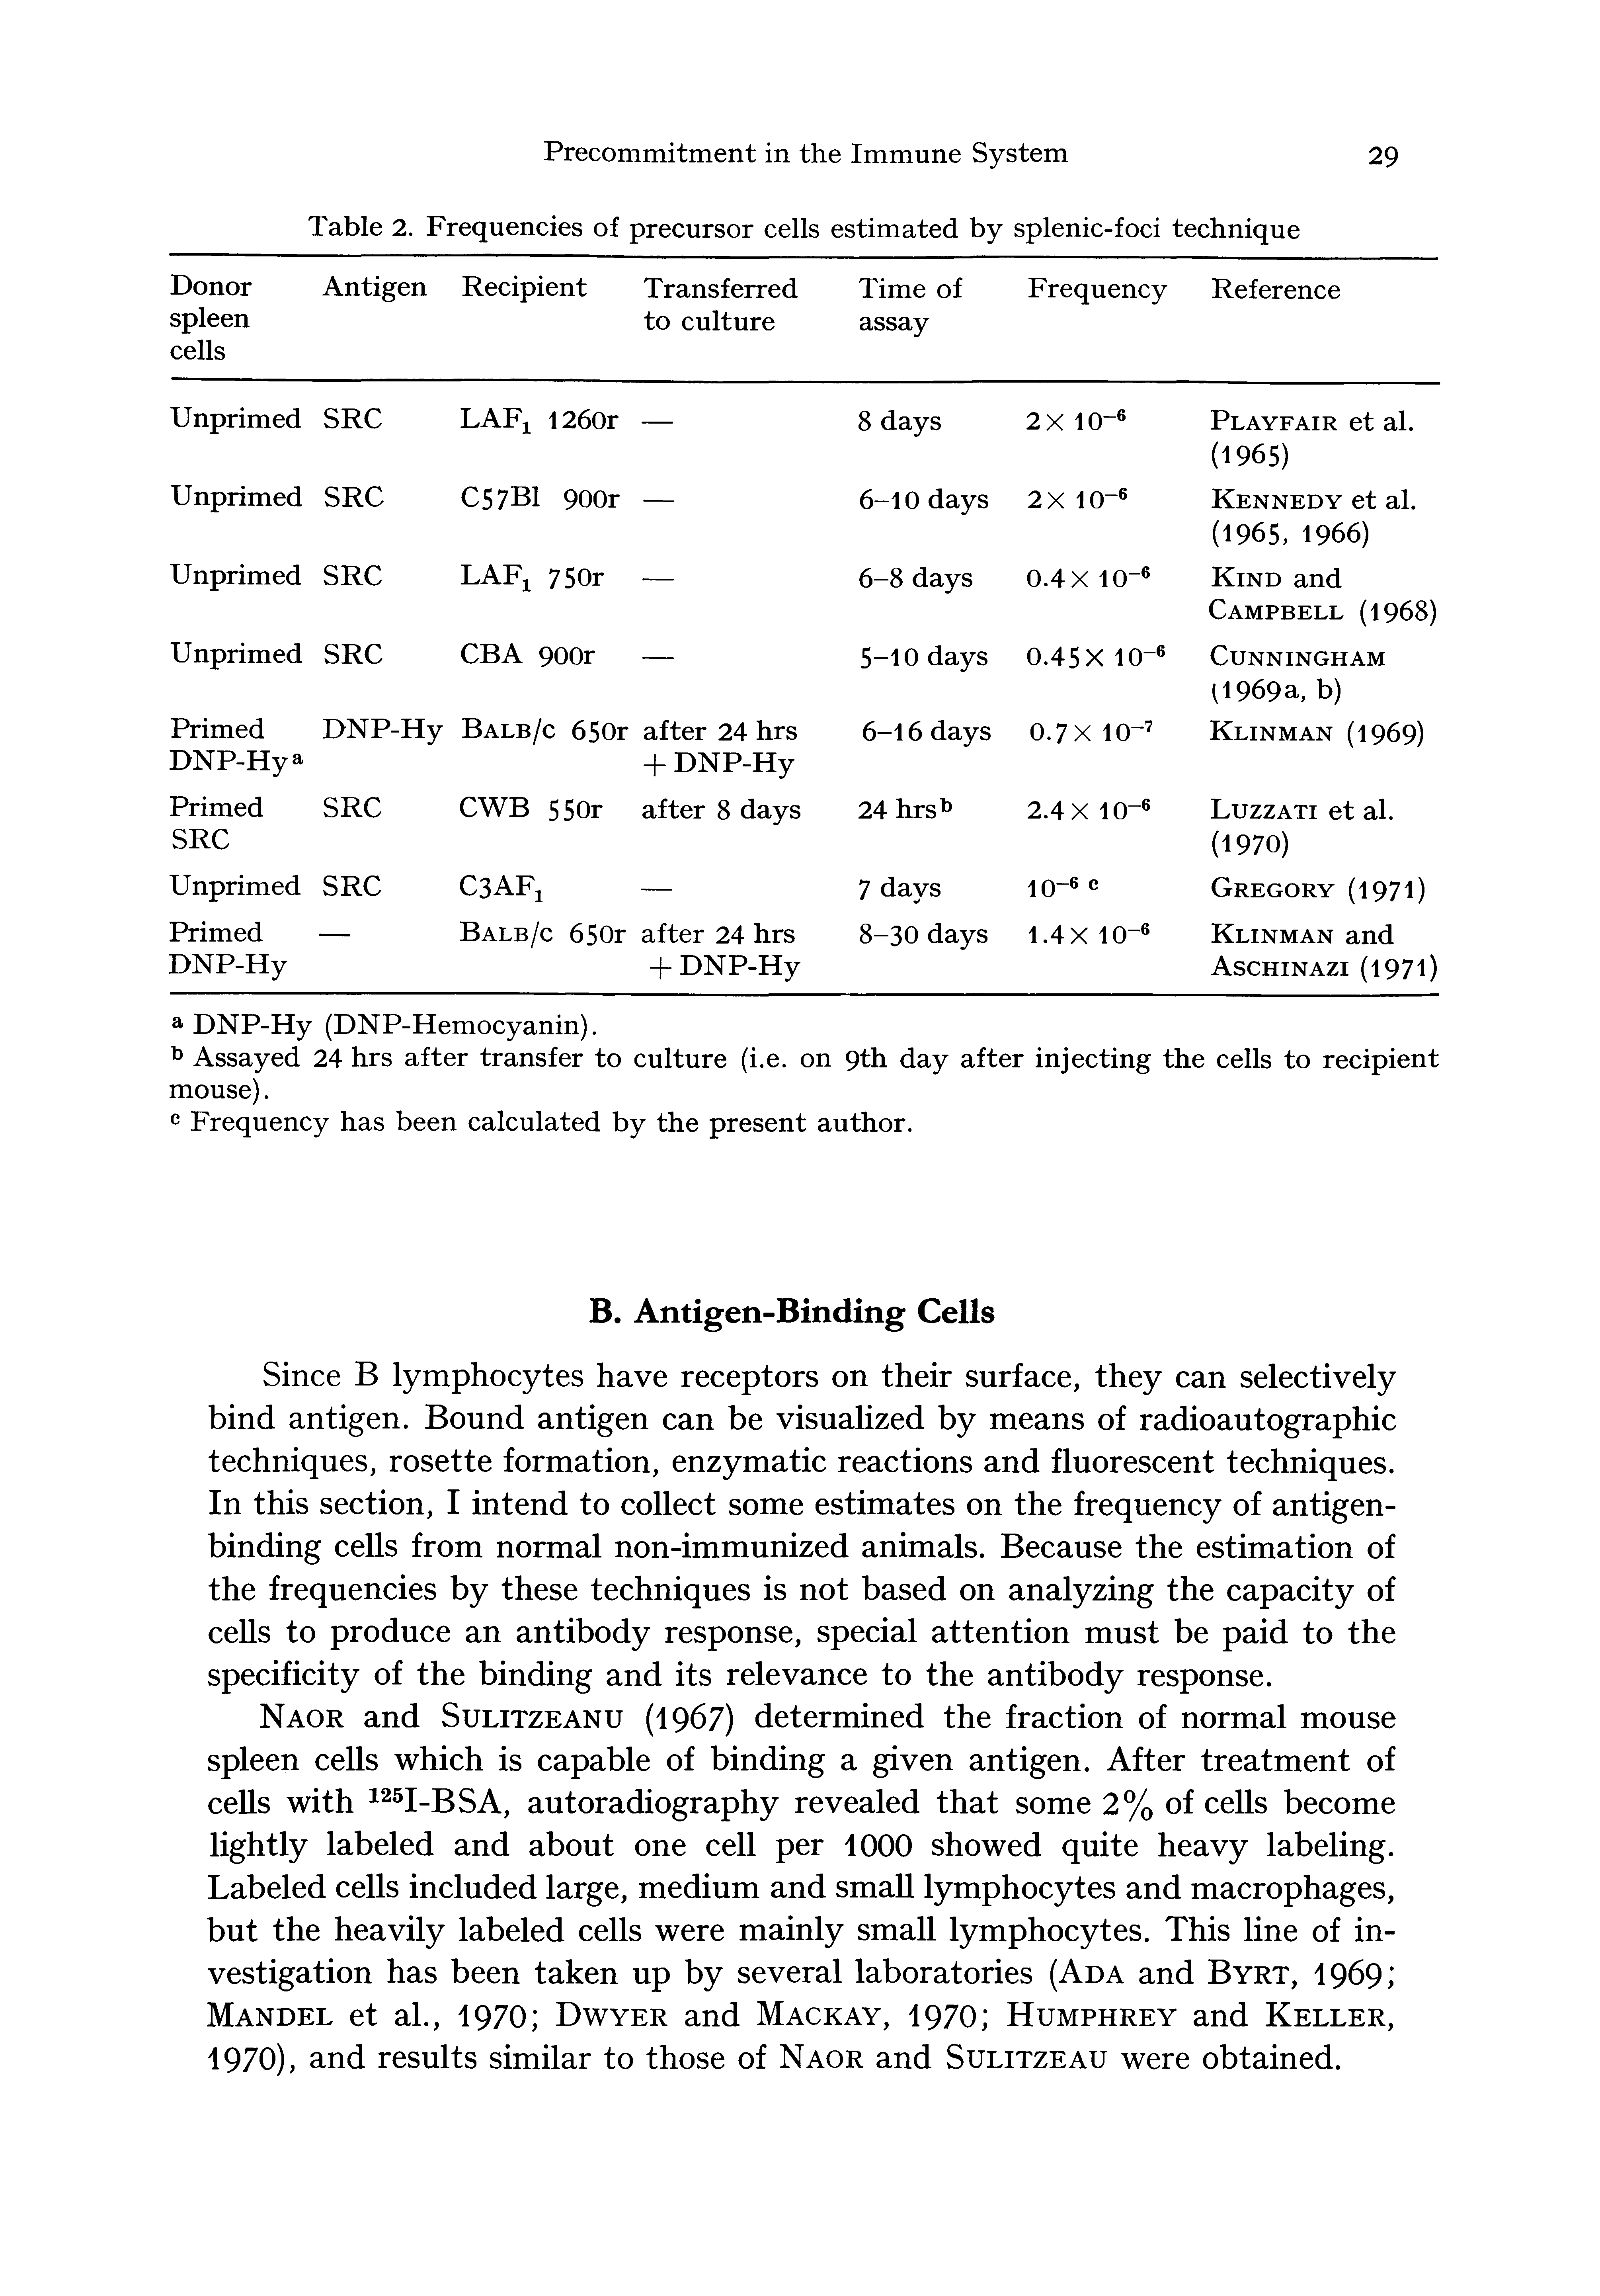 Table 2. Frequencies of precursor cells estimated by splenic-foci technique...